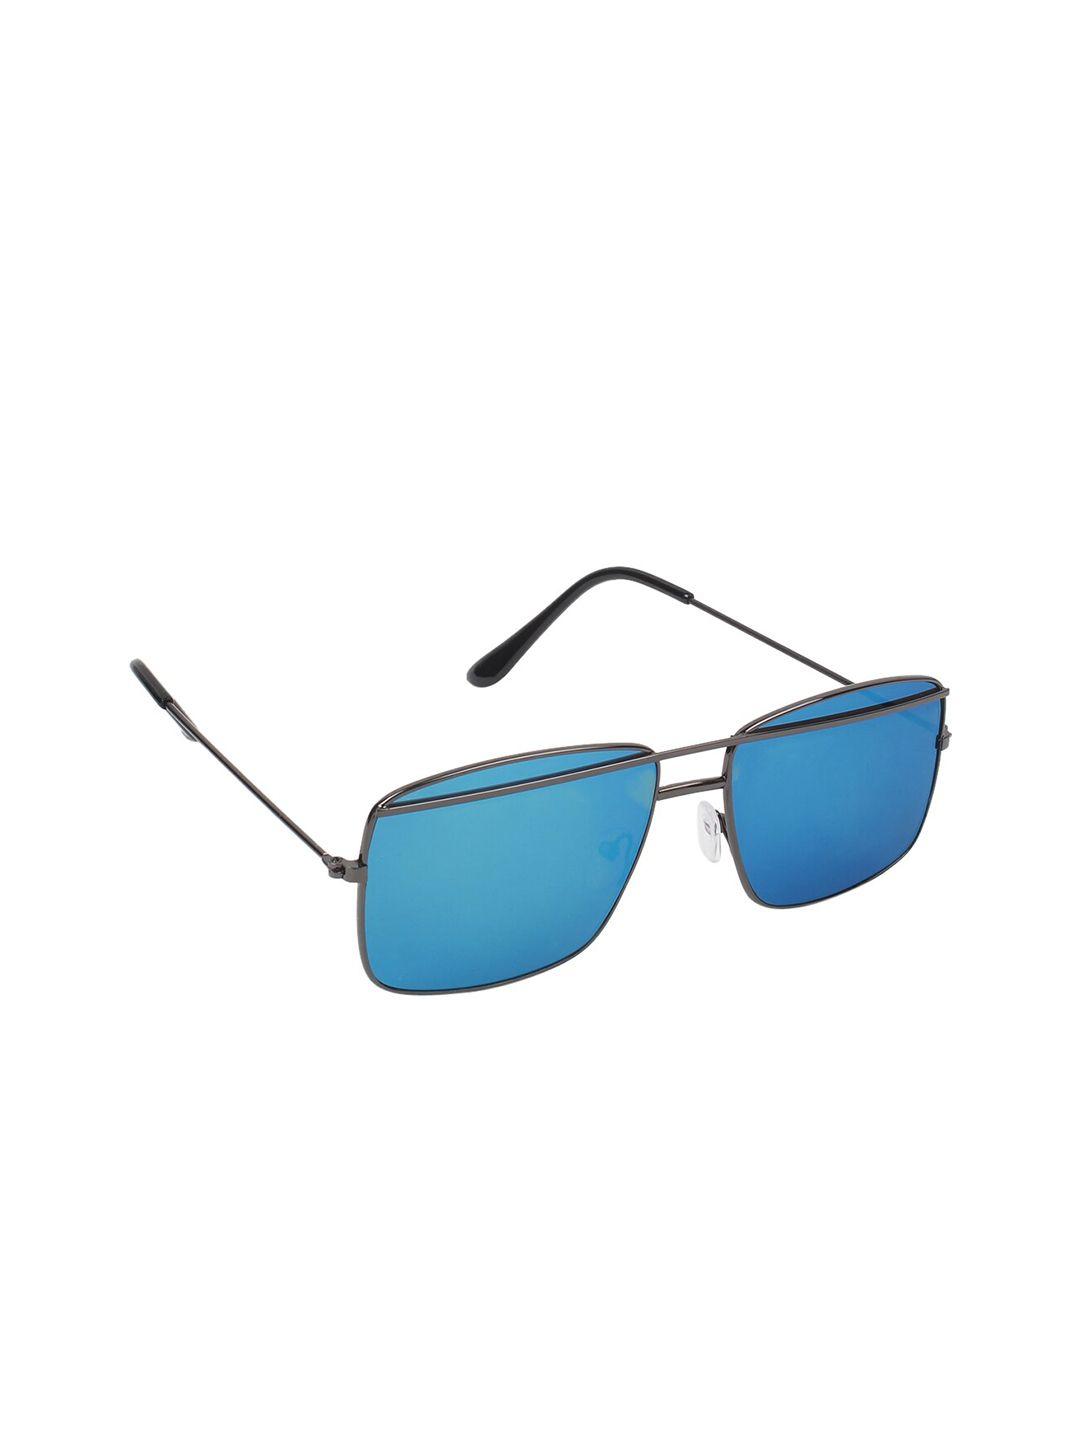 swiss design unisex blue & black browline sunglasses with uv protected lens sdsg21-7603603